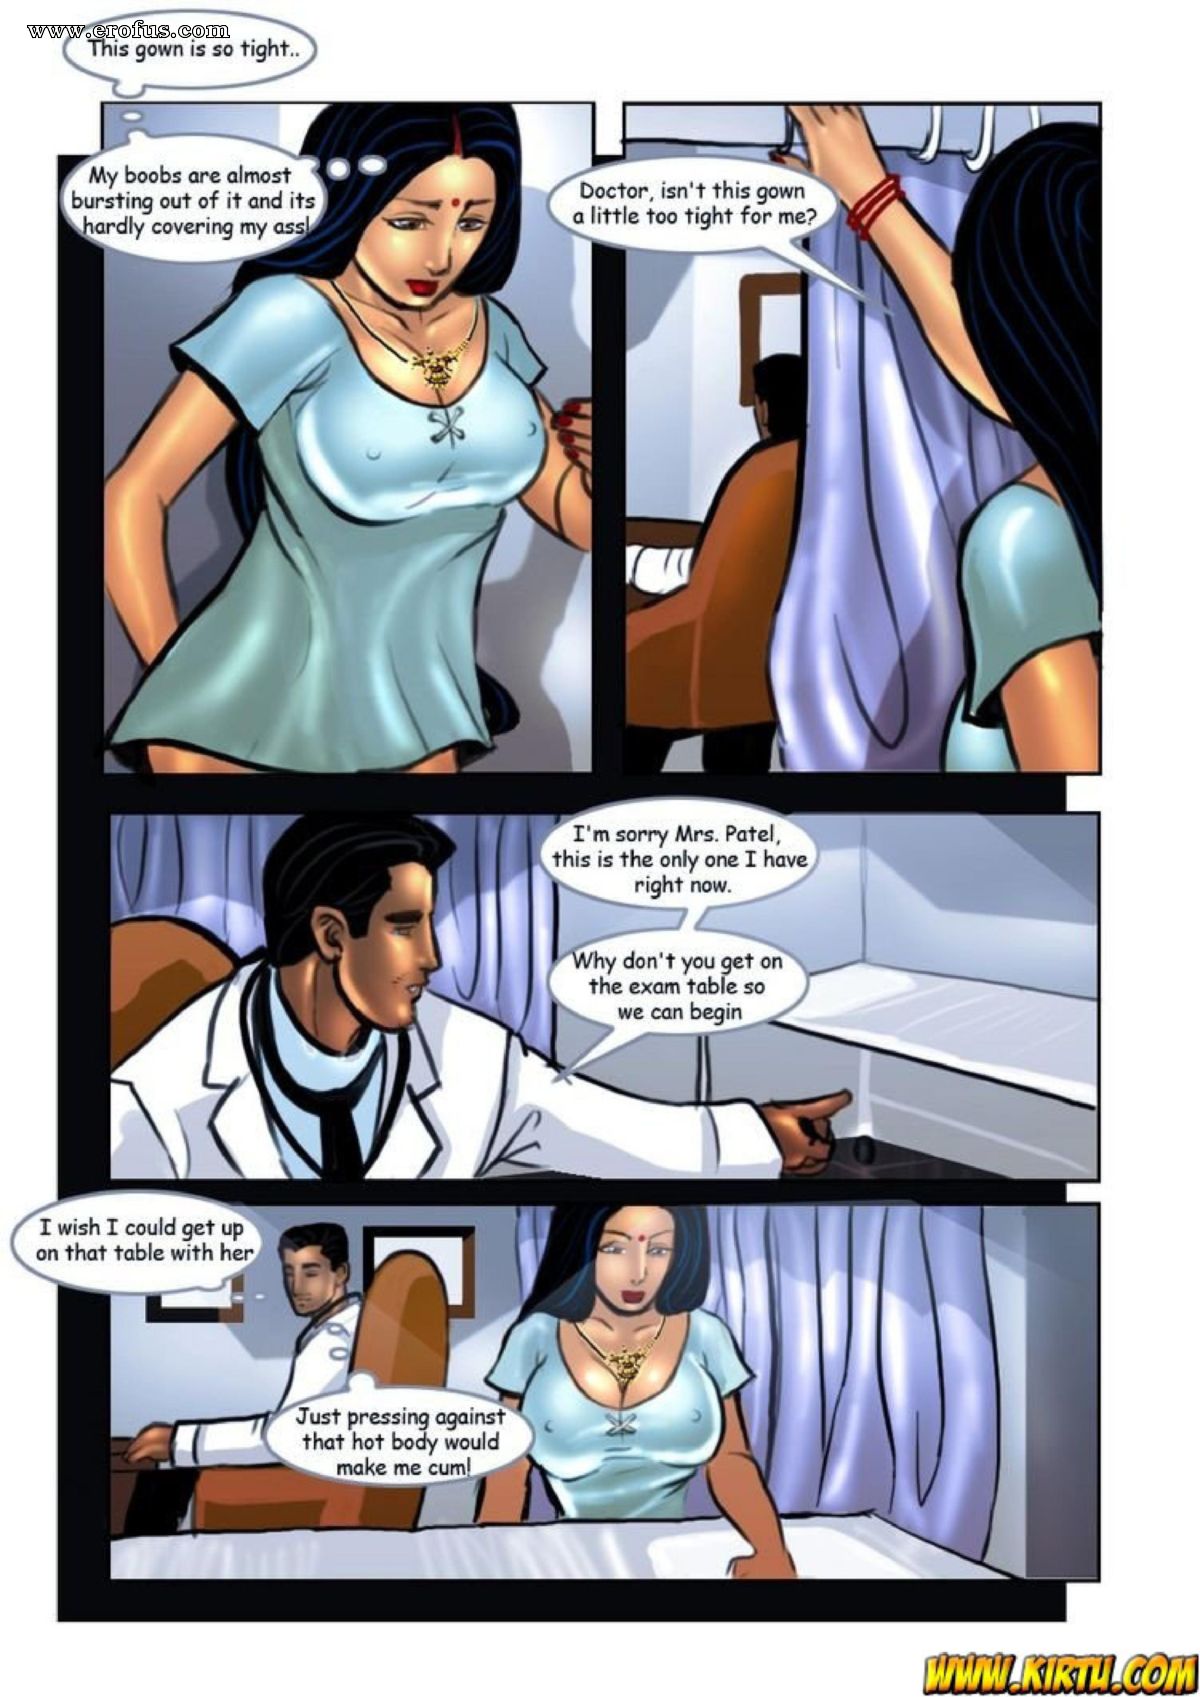 Page 5 Kirtu-Comix/Savita-Bhabhi/Doctor-Doctor Erofus